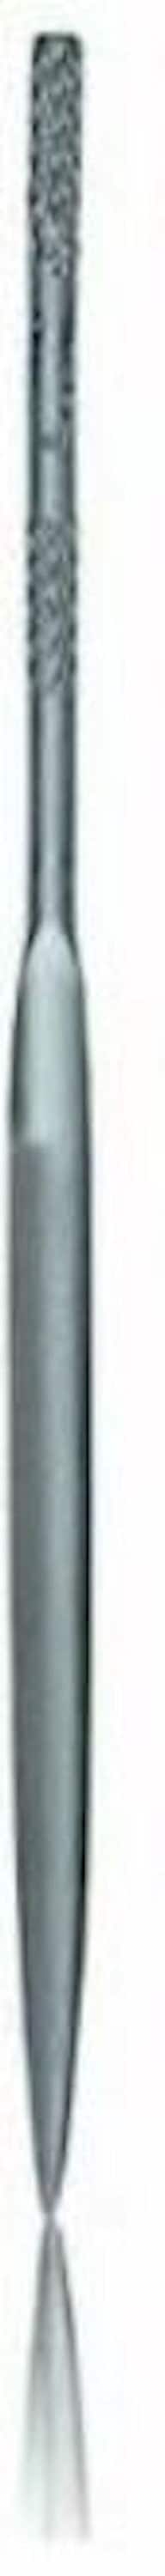 GLARDON-VALLORBE SWISS Needle File Marking Half Round 16cm Cut # 2 LA2418